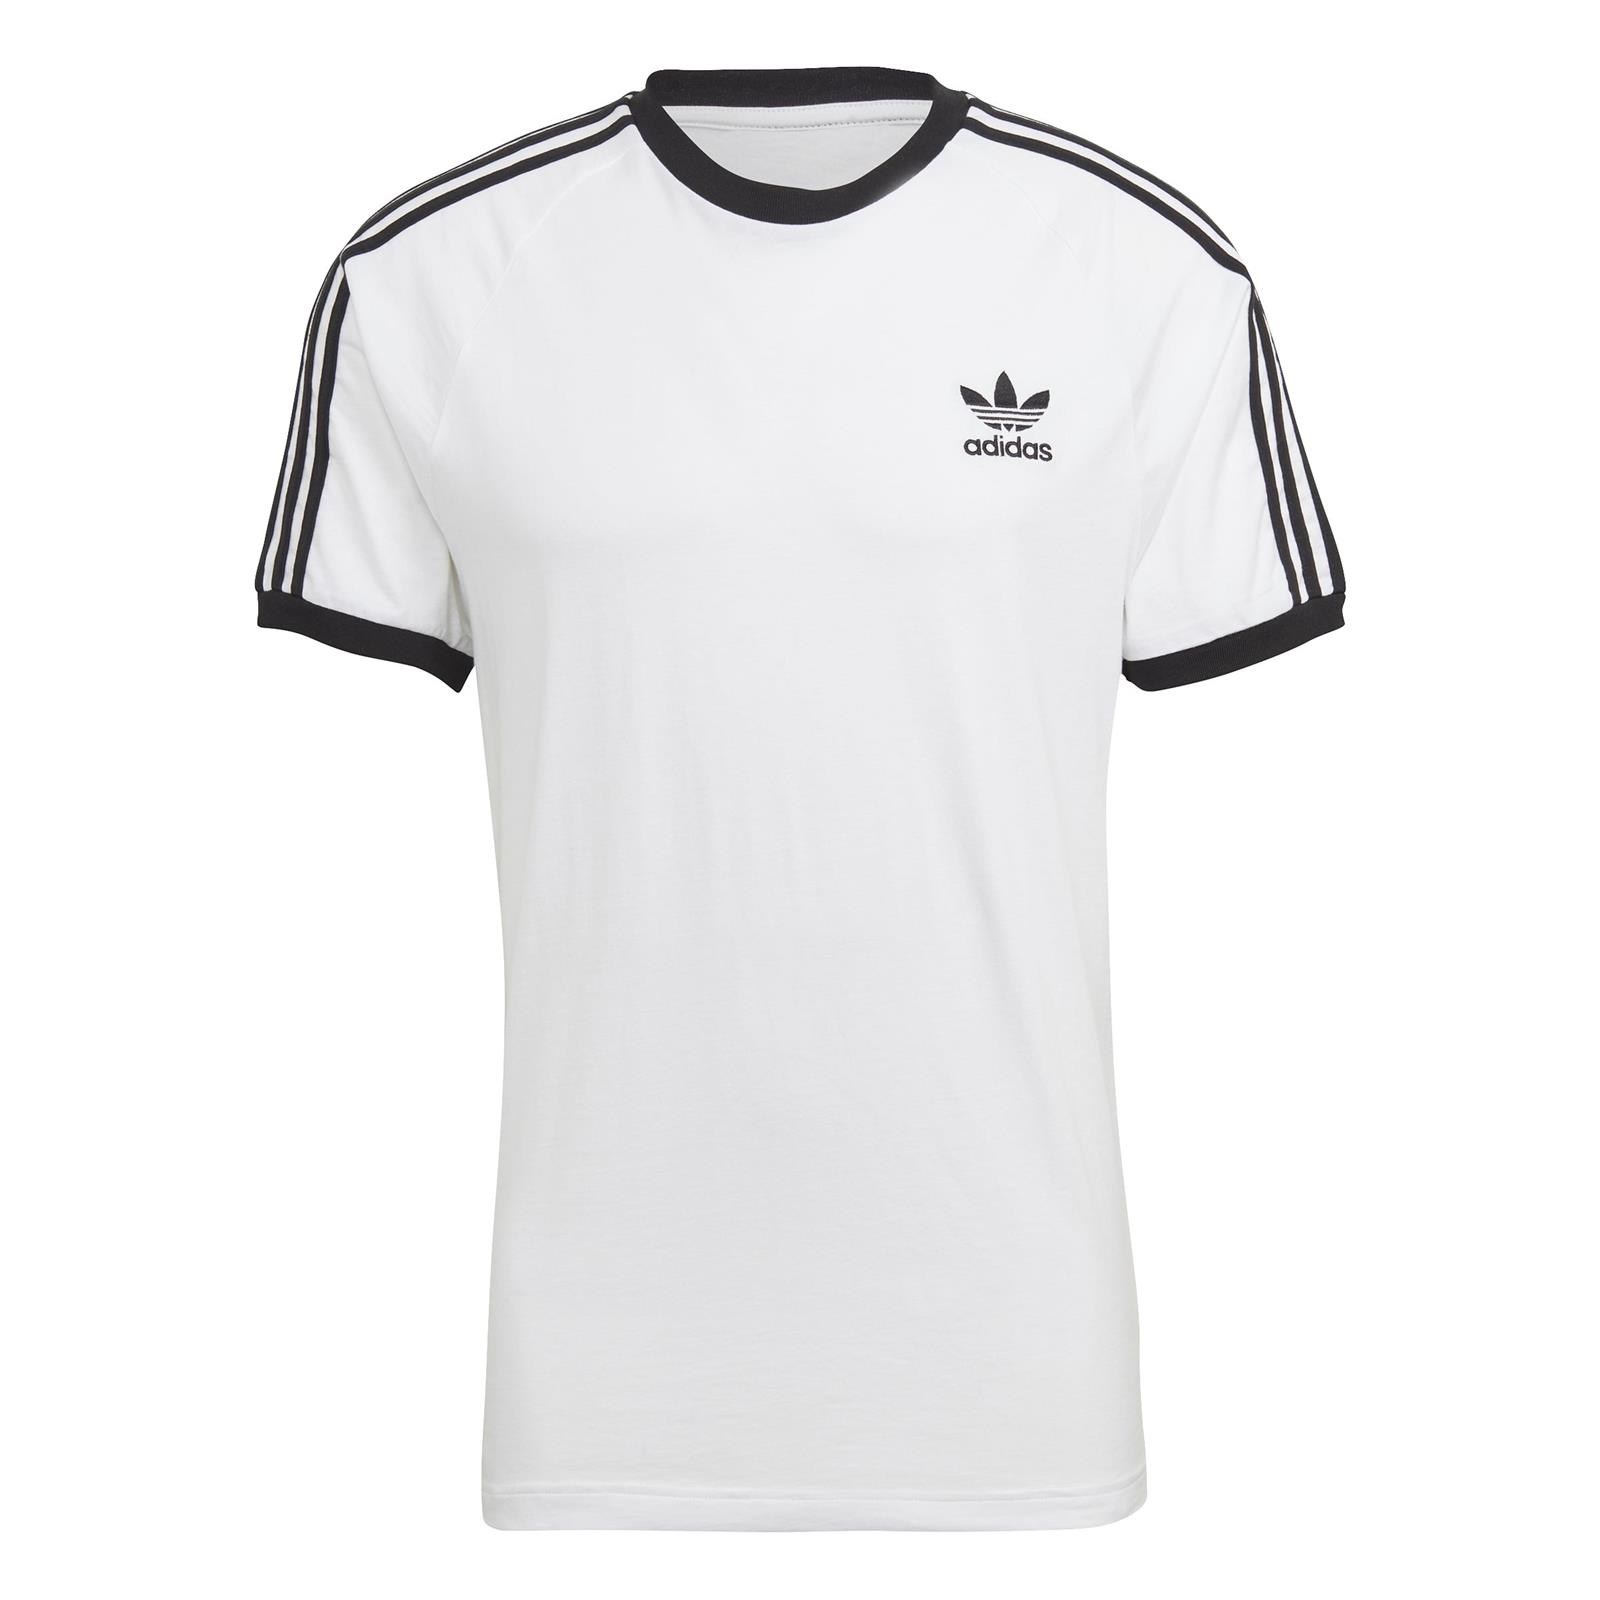 Adidas Koszulka 3 Stripes Order Cheapest, Save 62% | jlcatj.gob.mx